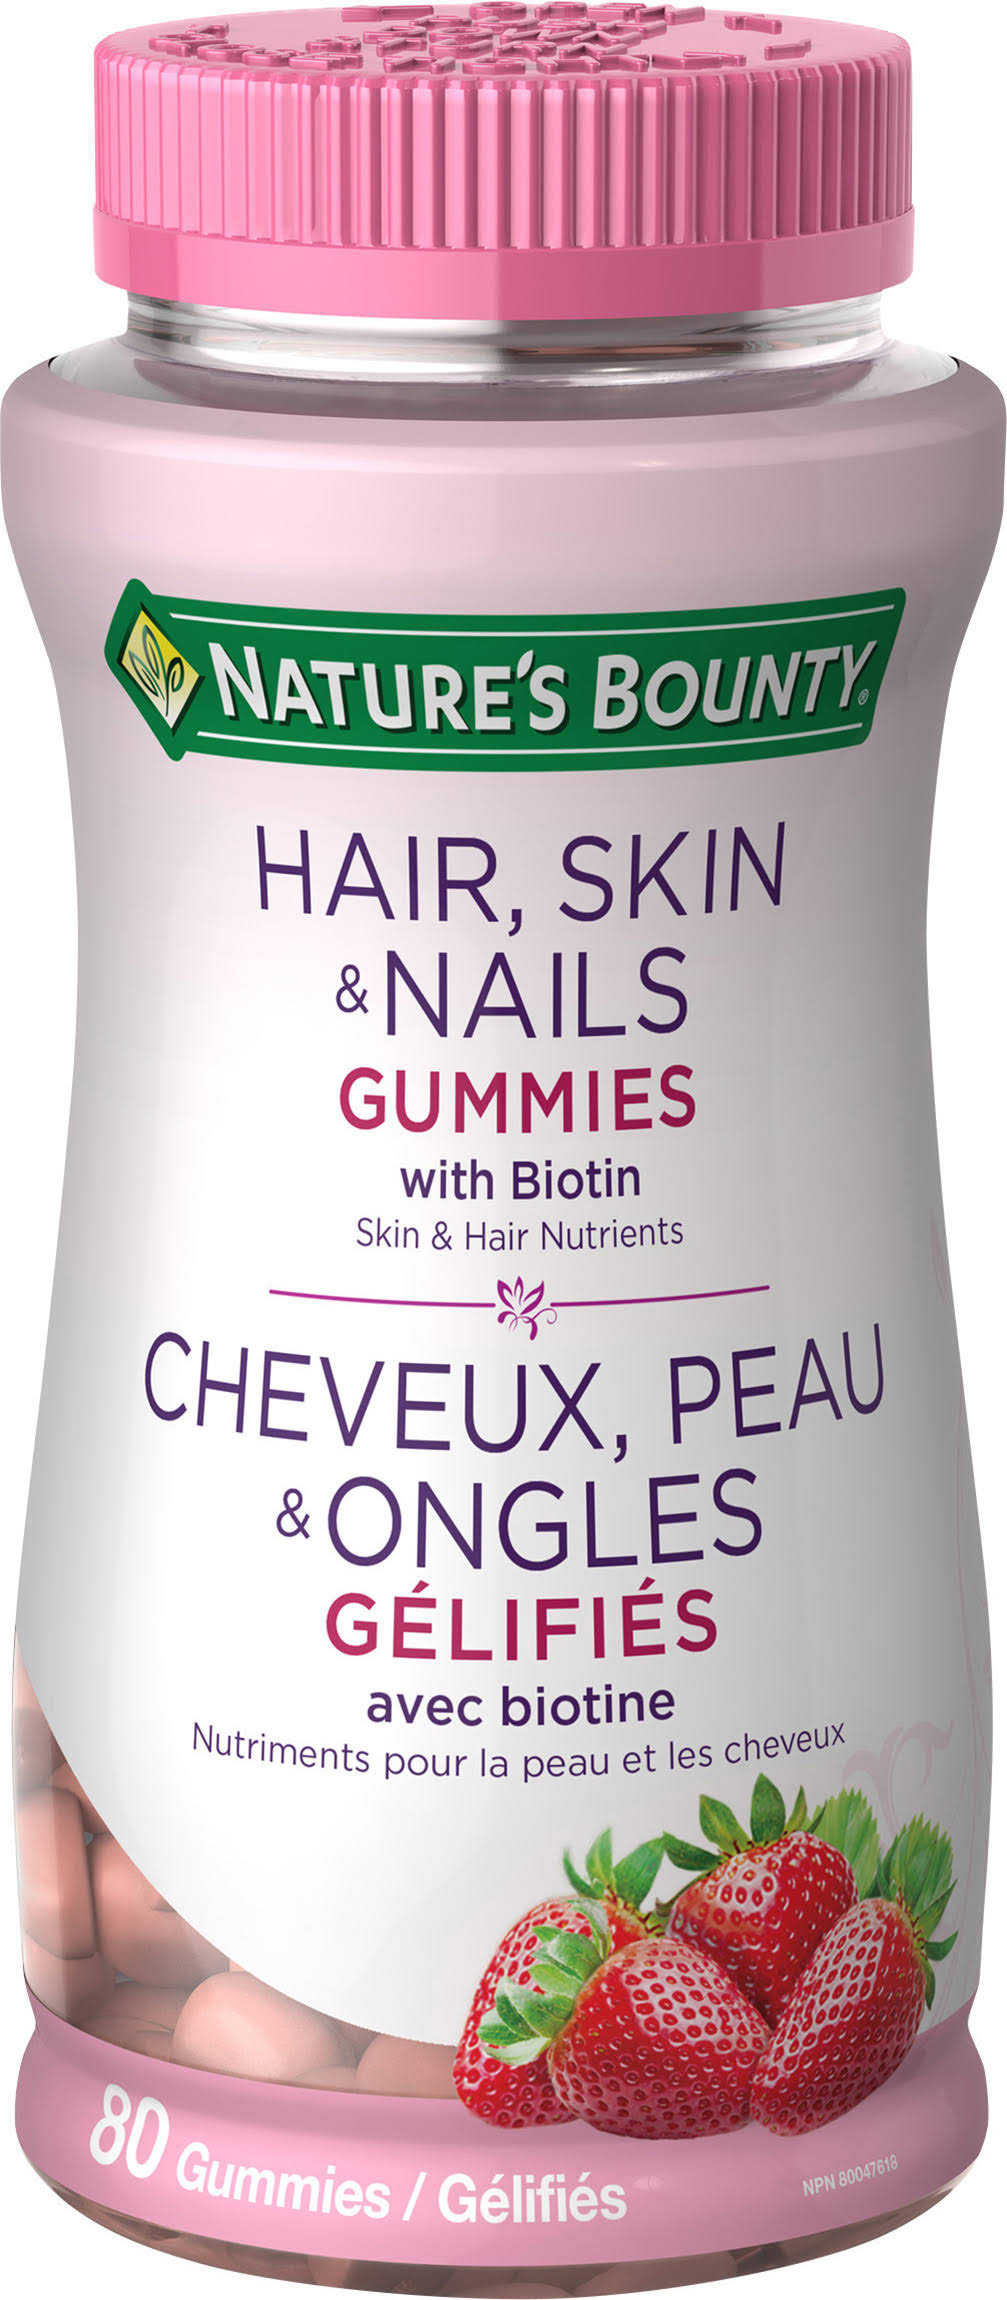 Nature's Bounty Hair, Skin, Nails Gummies with Biotin, 80 Gummies